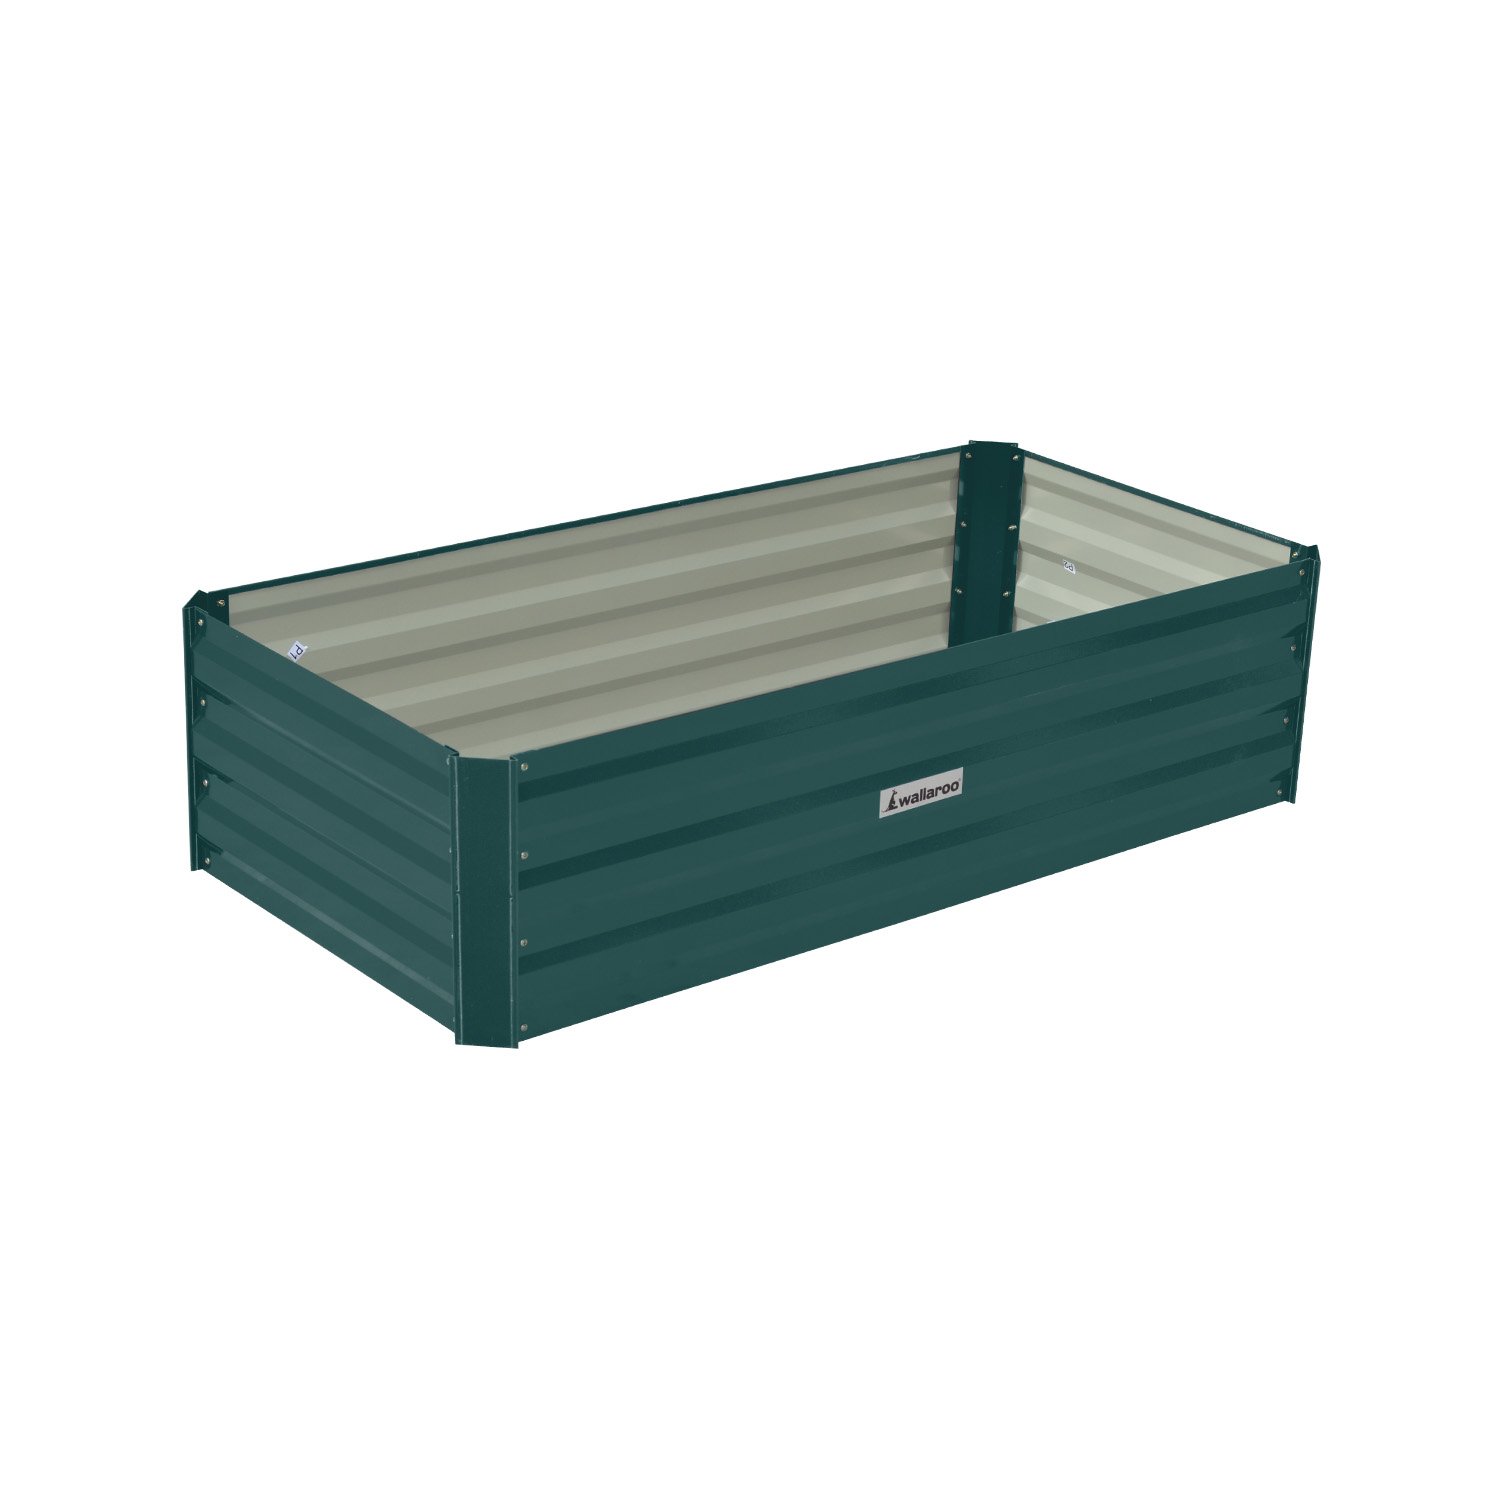 Wallaroo Garden Bed 120 x 60 x 30cm Galvanized Steel - Green 1